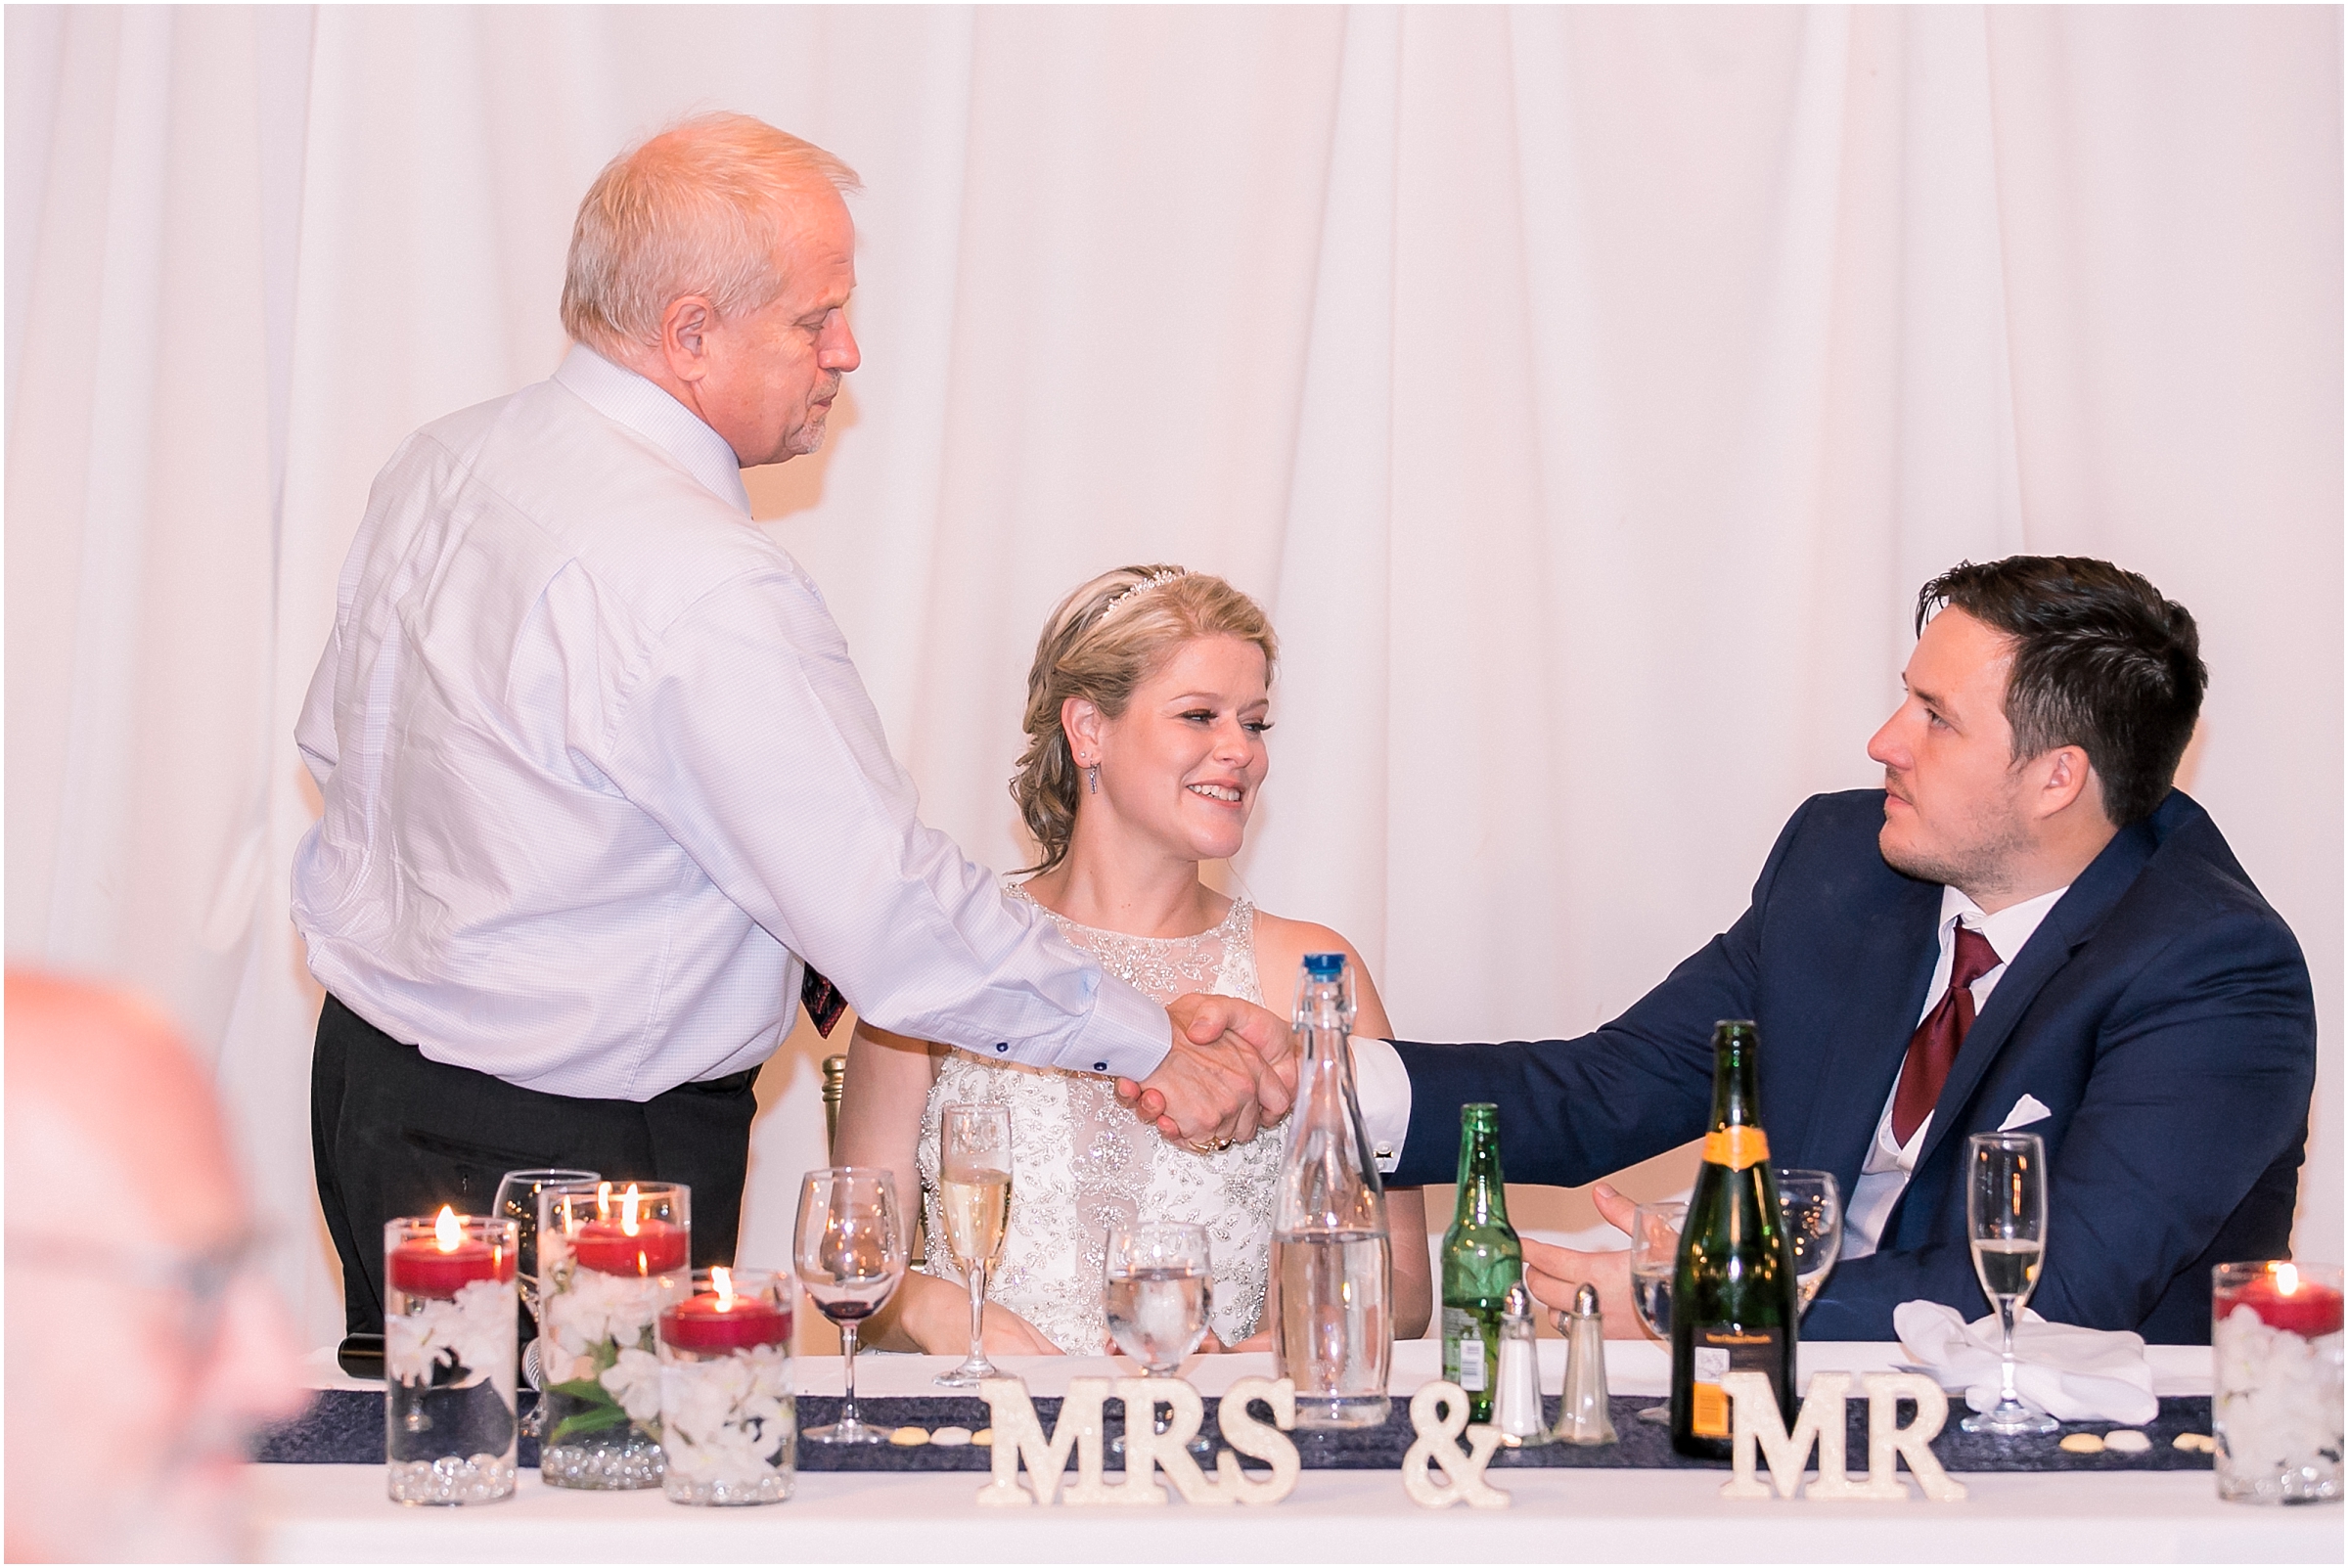 Lord Hill Farms Intimate Wedding | Stephen & Robyn